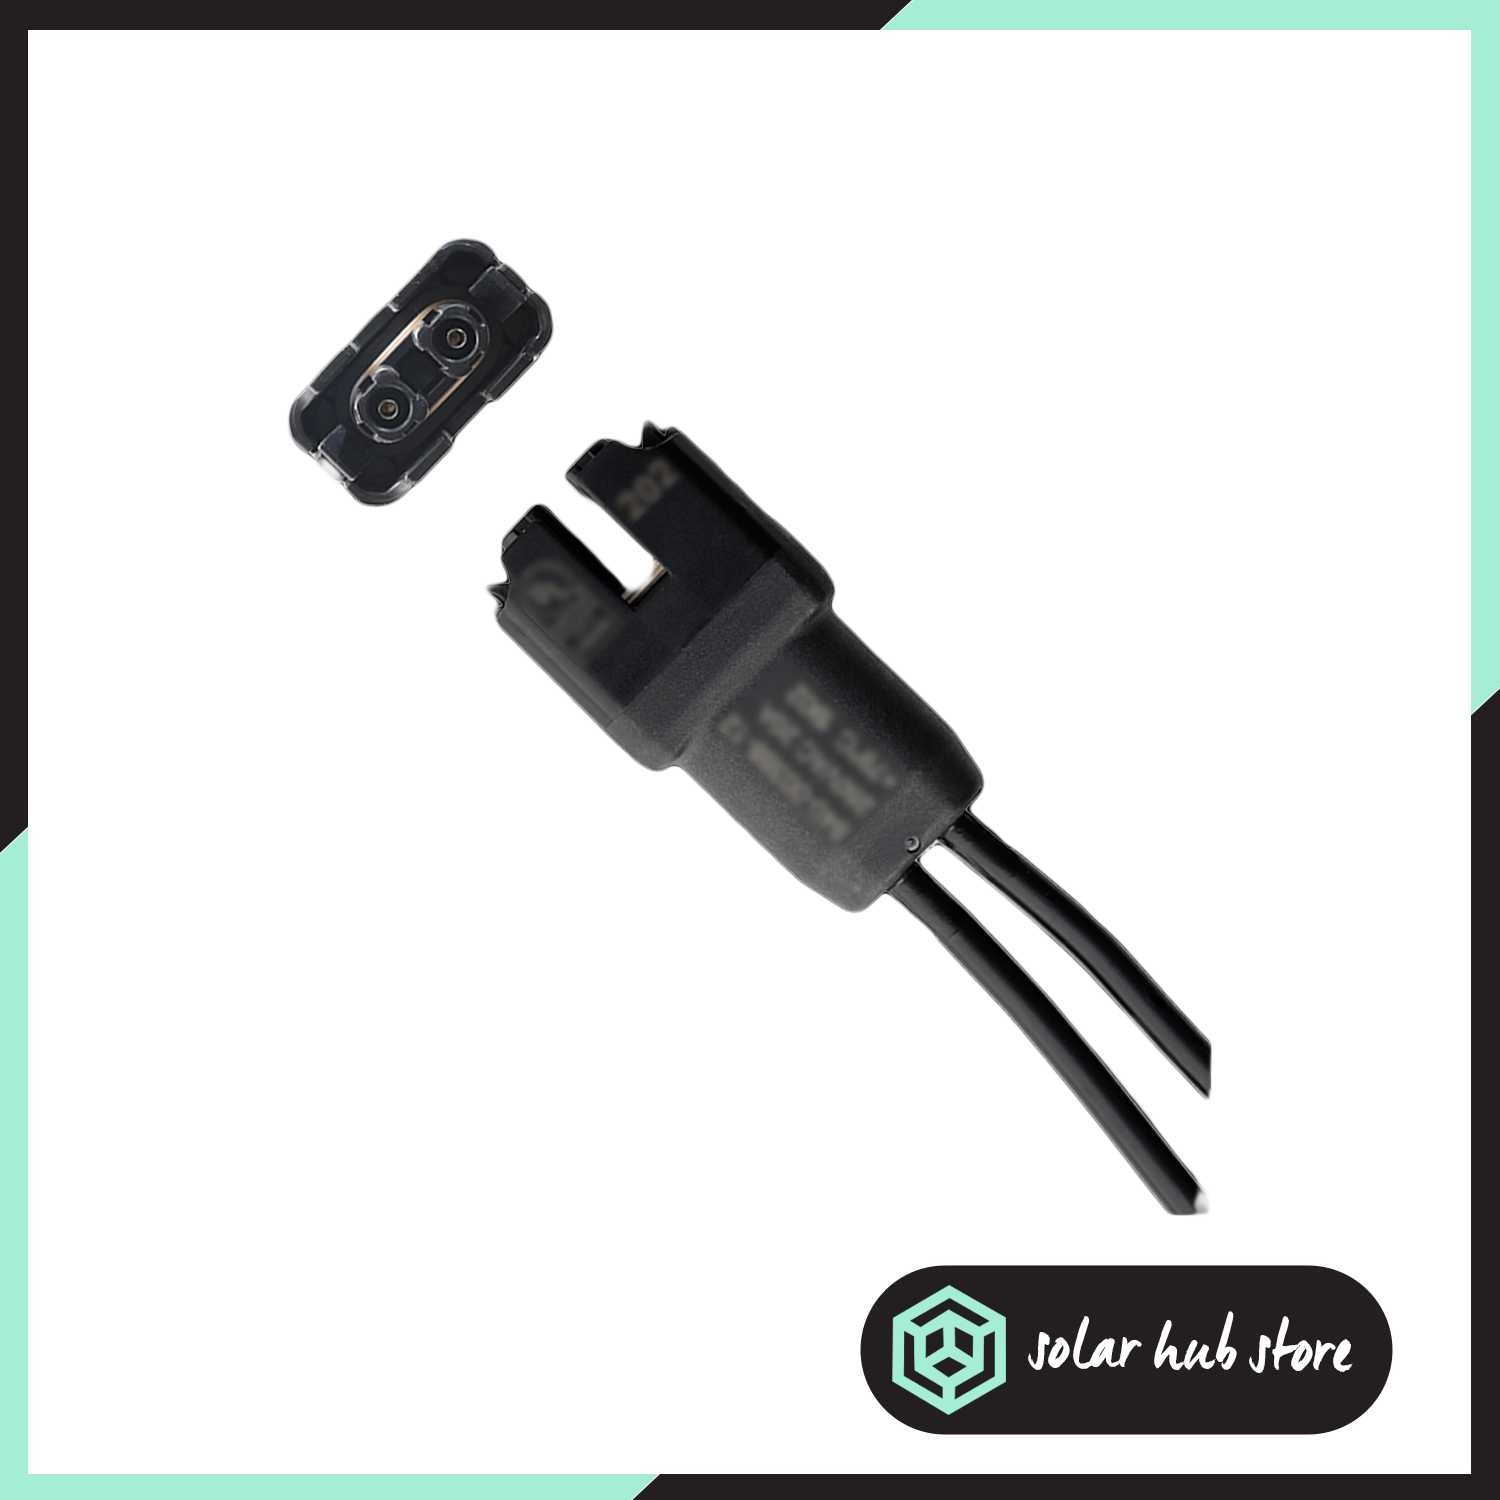 Enphase Q Cable: Reliable Microinverter Connection